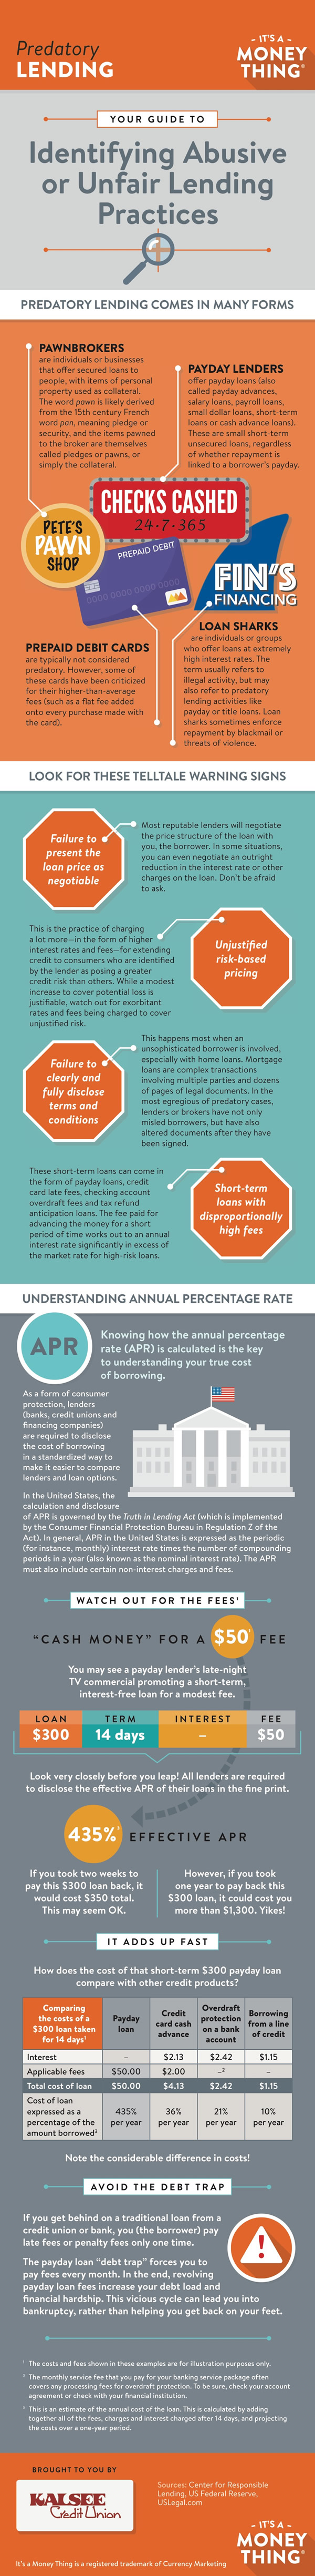 predatory lending infographic, click for transcription